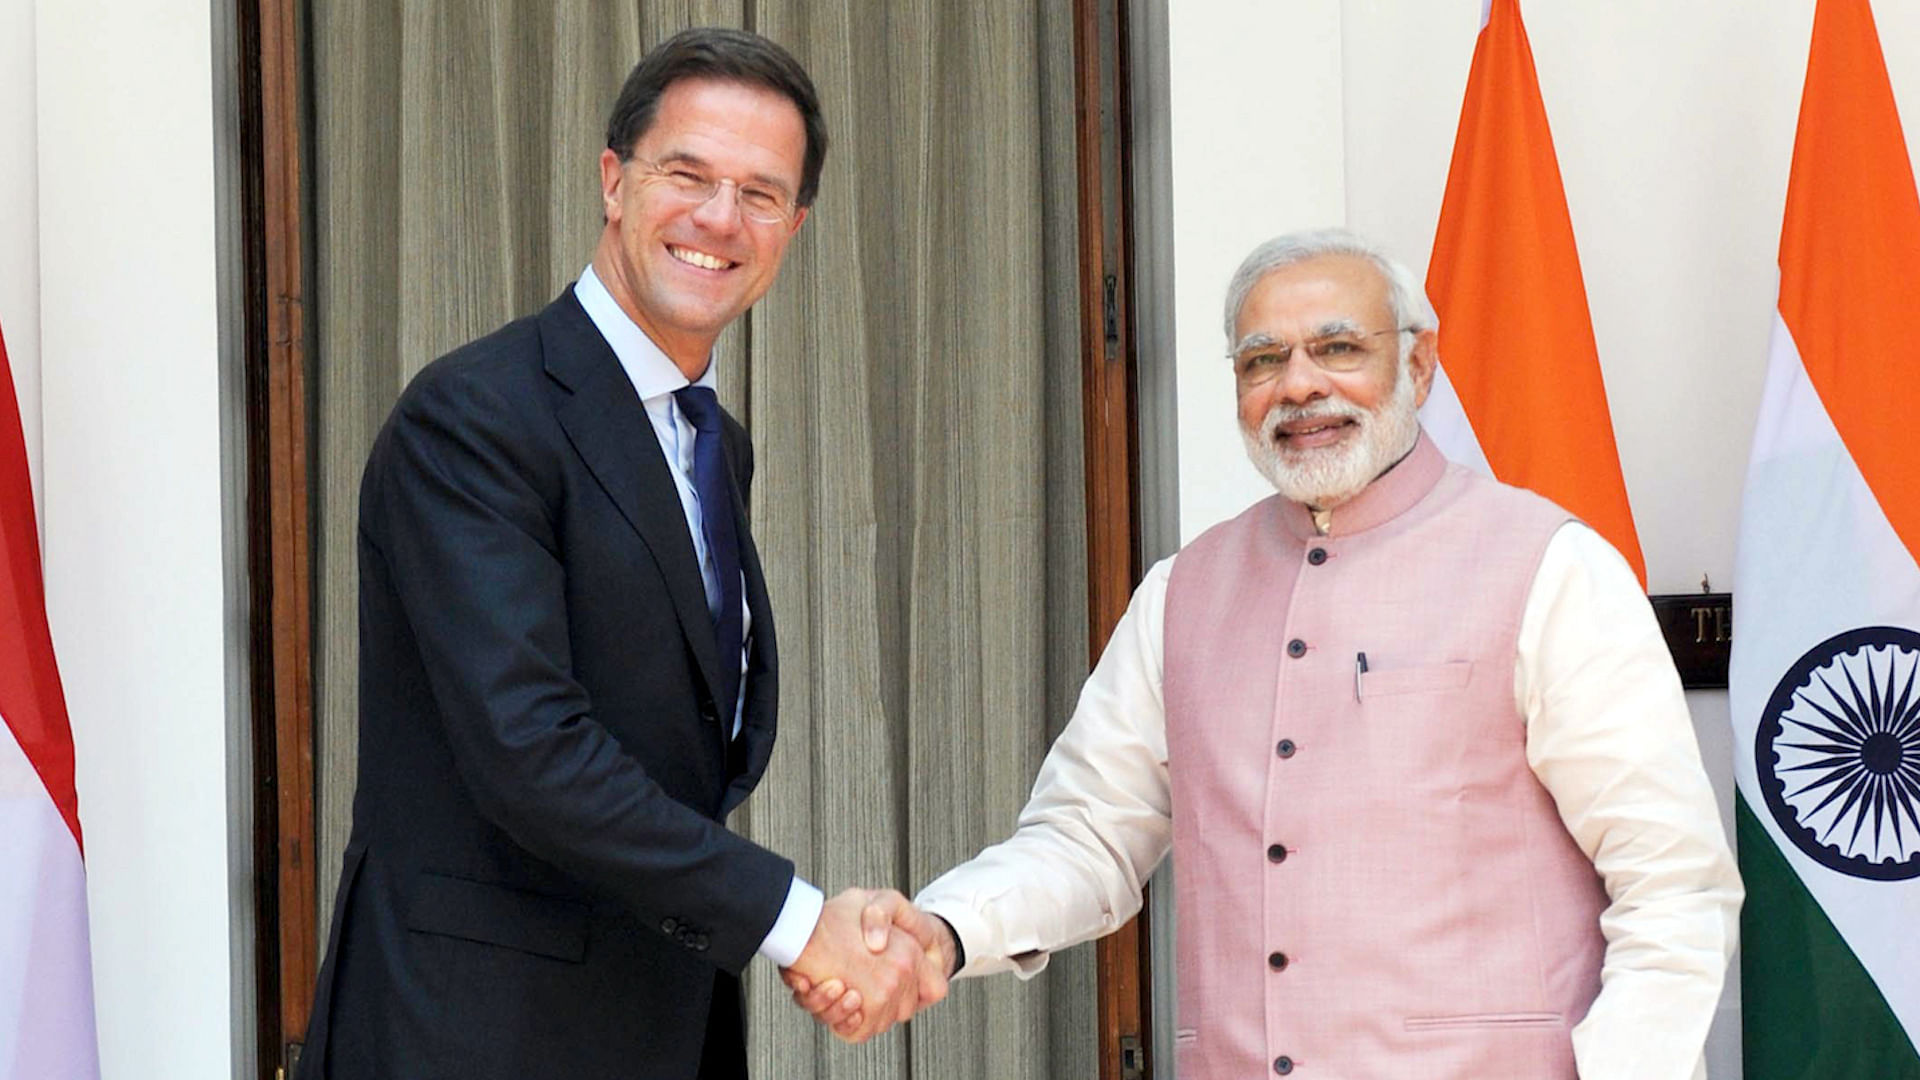 Netherlands Prime Minister Mark Rutte and Indian Prime Minister Narendra Modi (Photo: PIB)